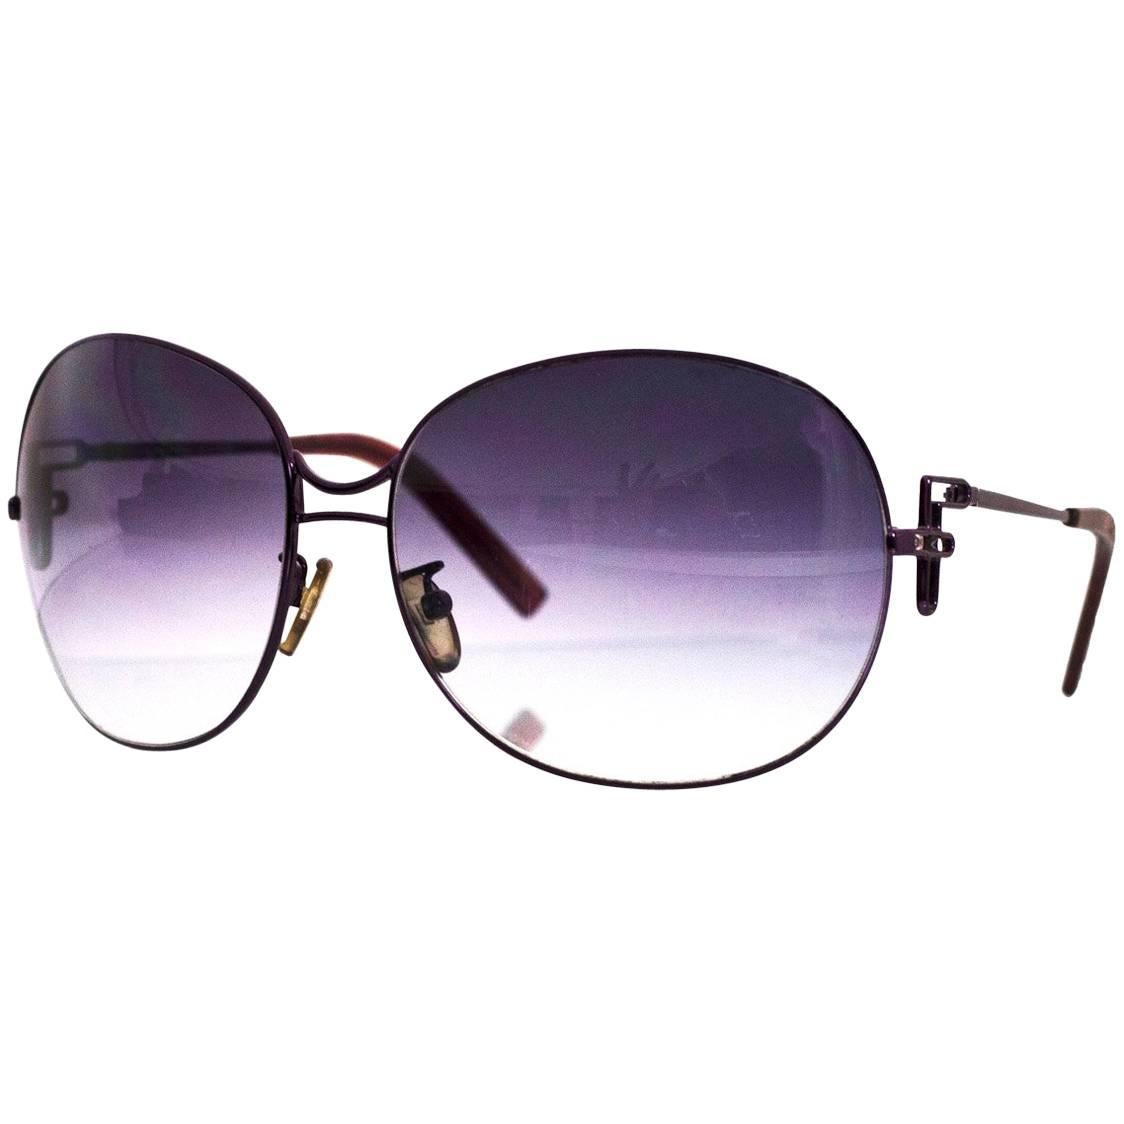 Fendi Purple Round Sunglasses with Case